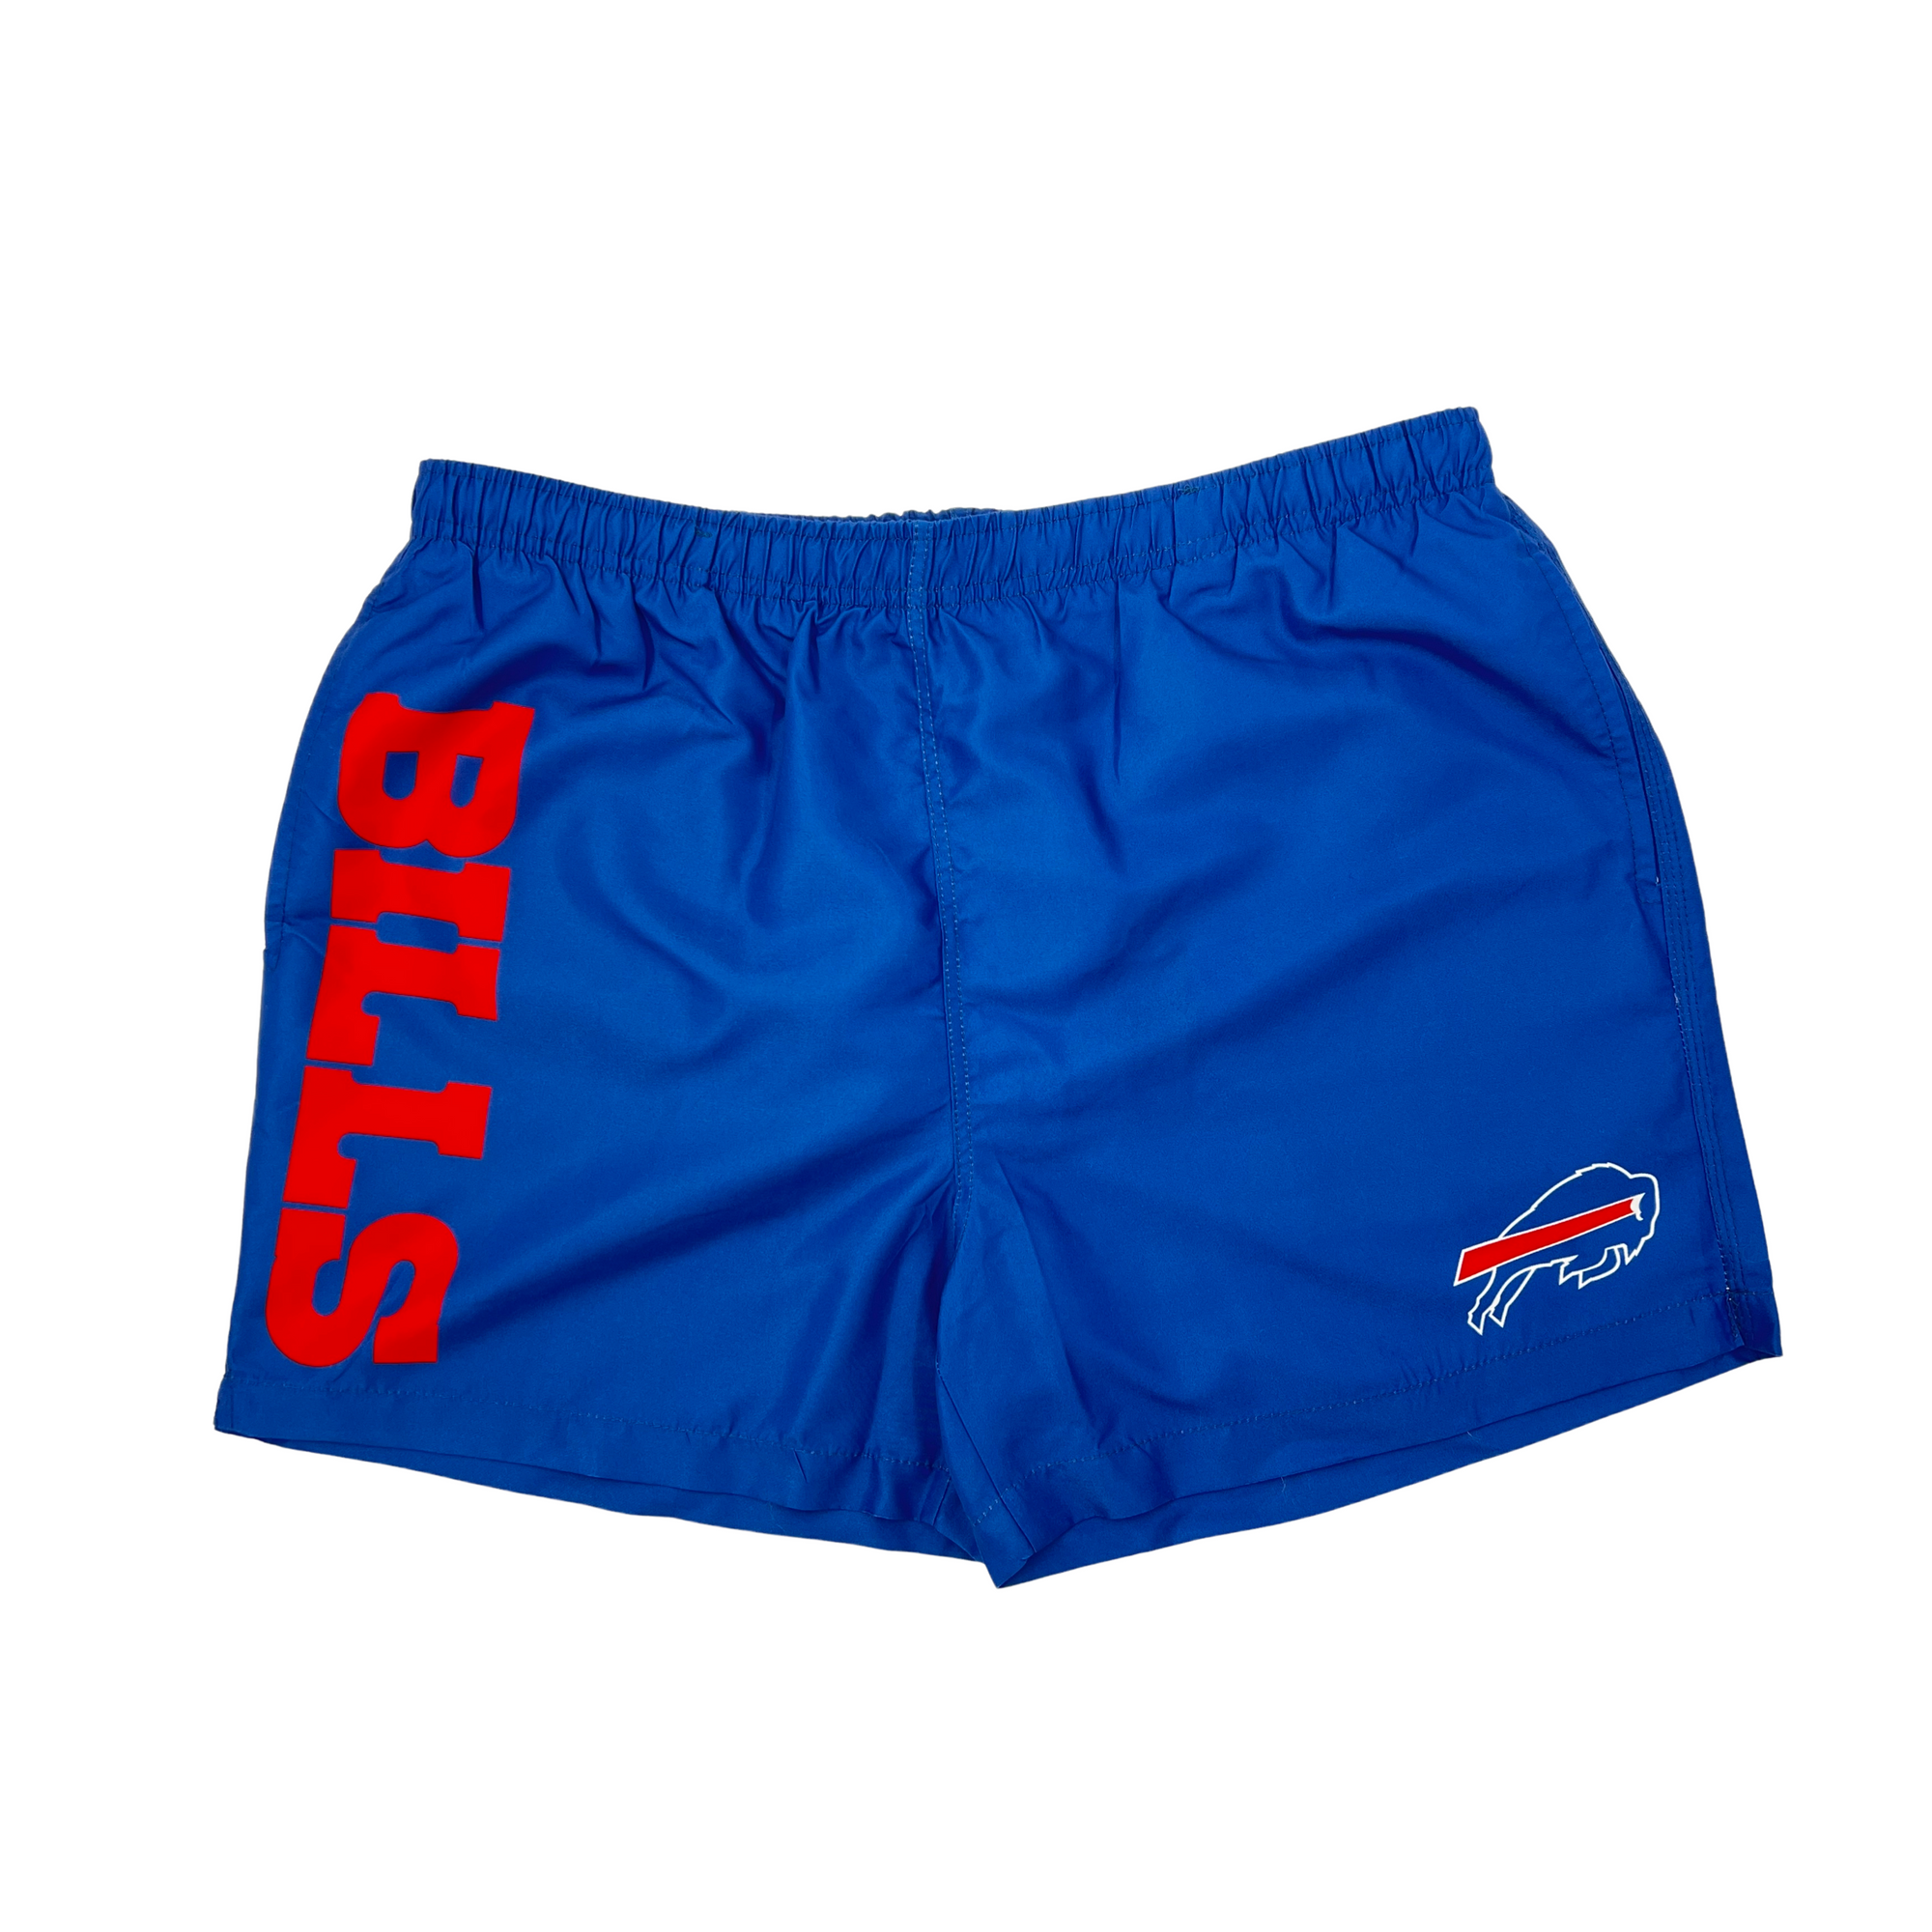 Buffalo Bills Solid Blue Swim Trunks